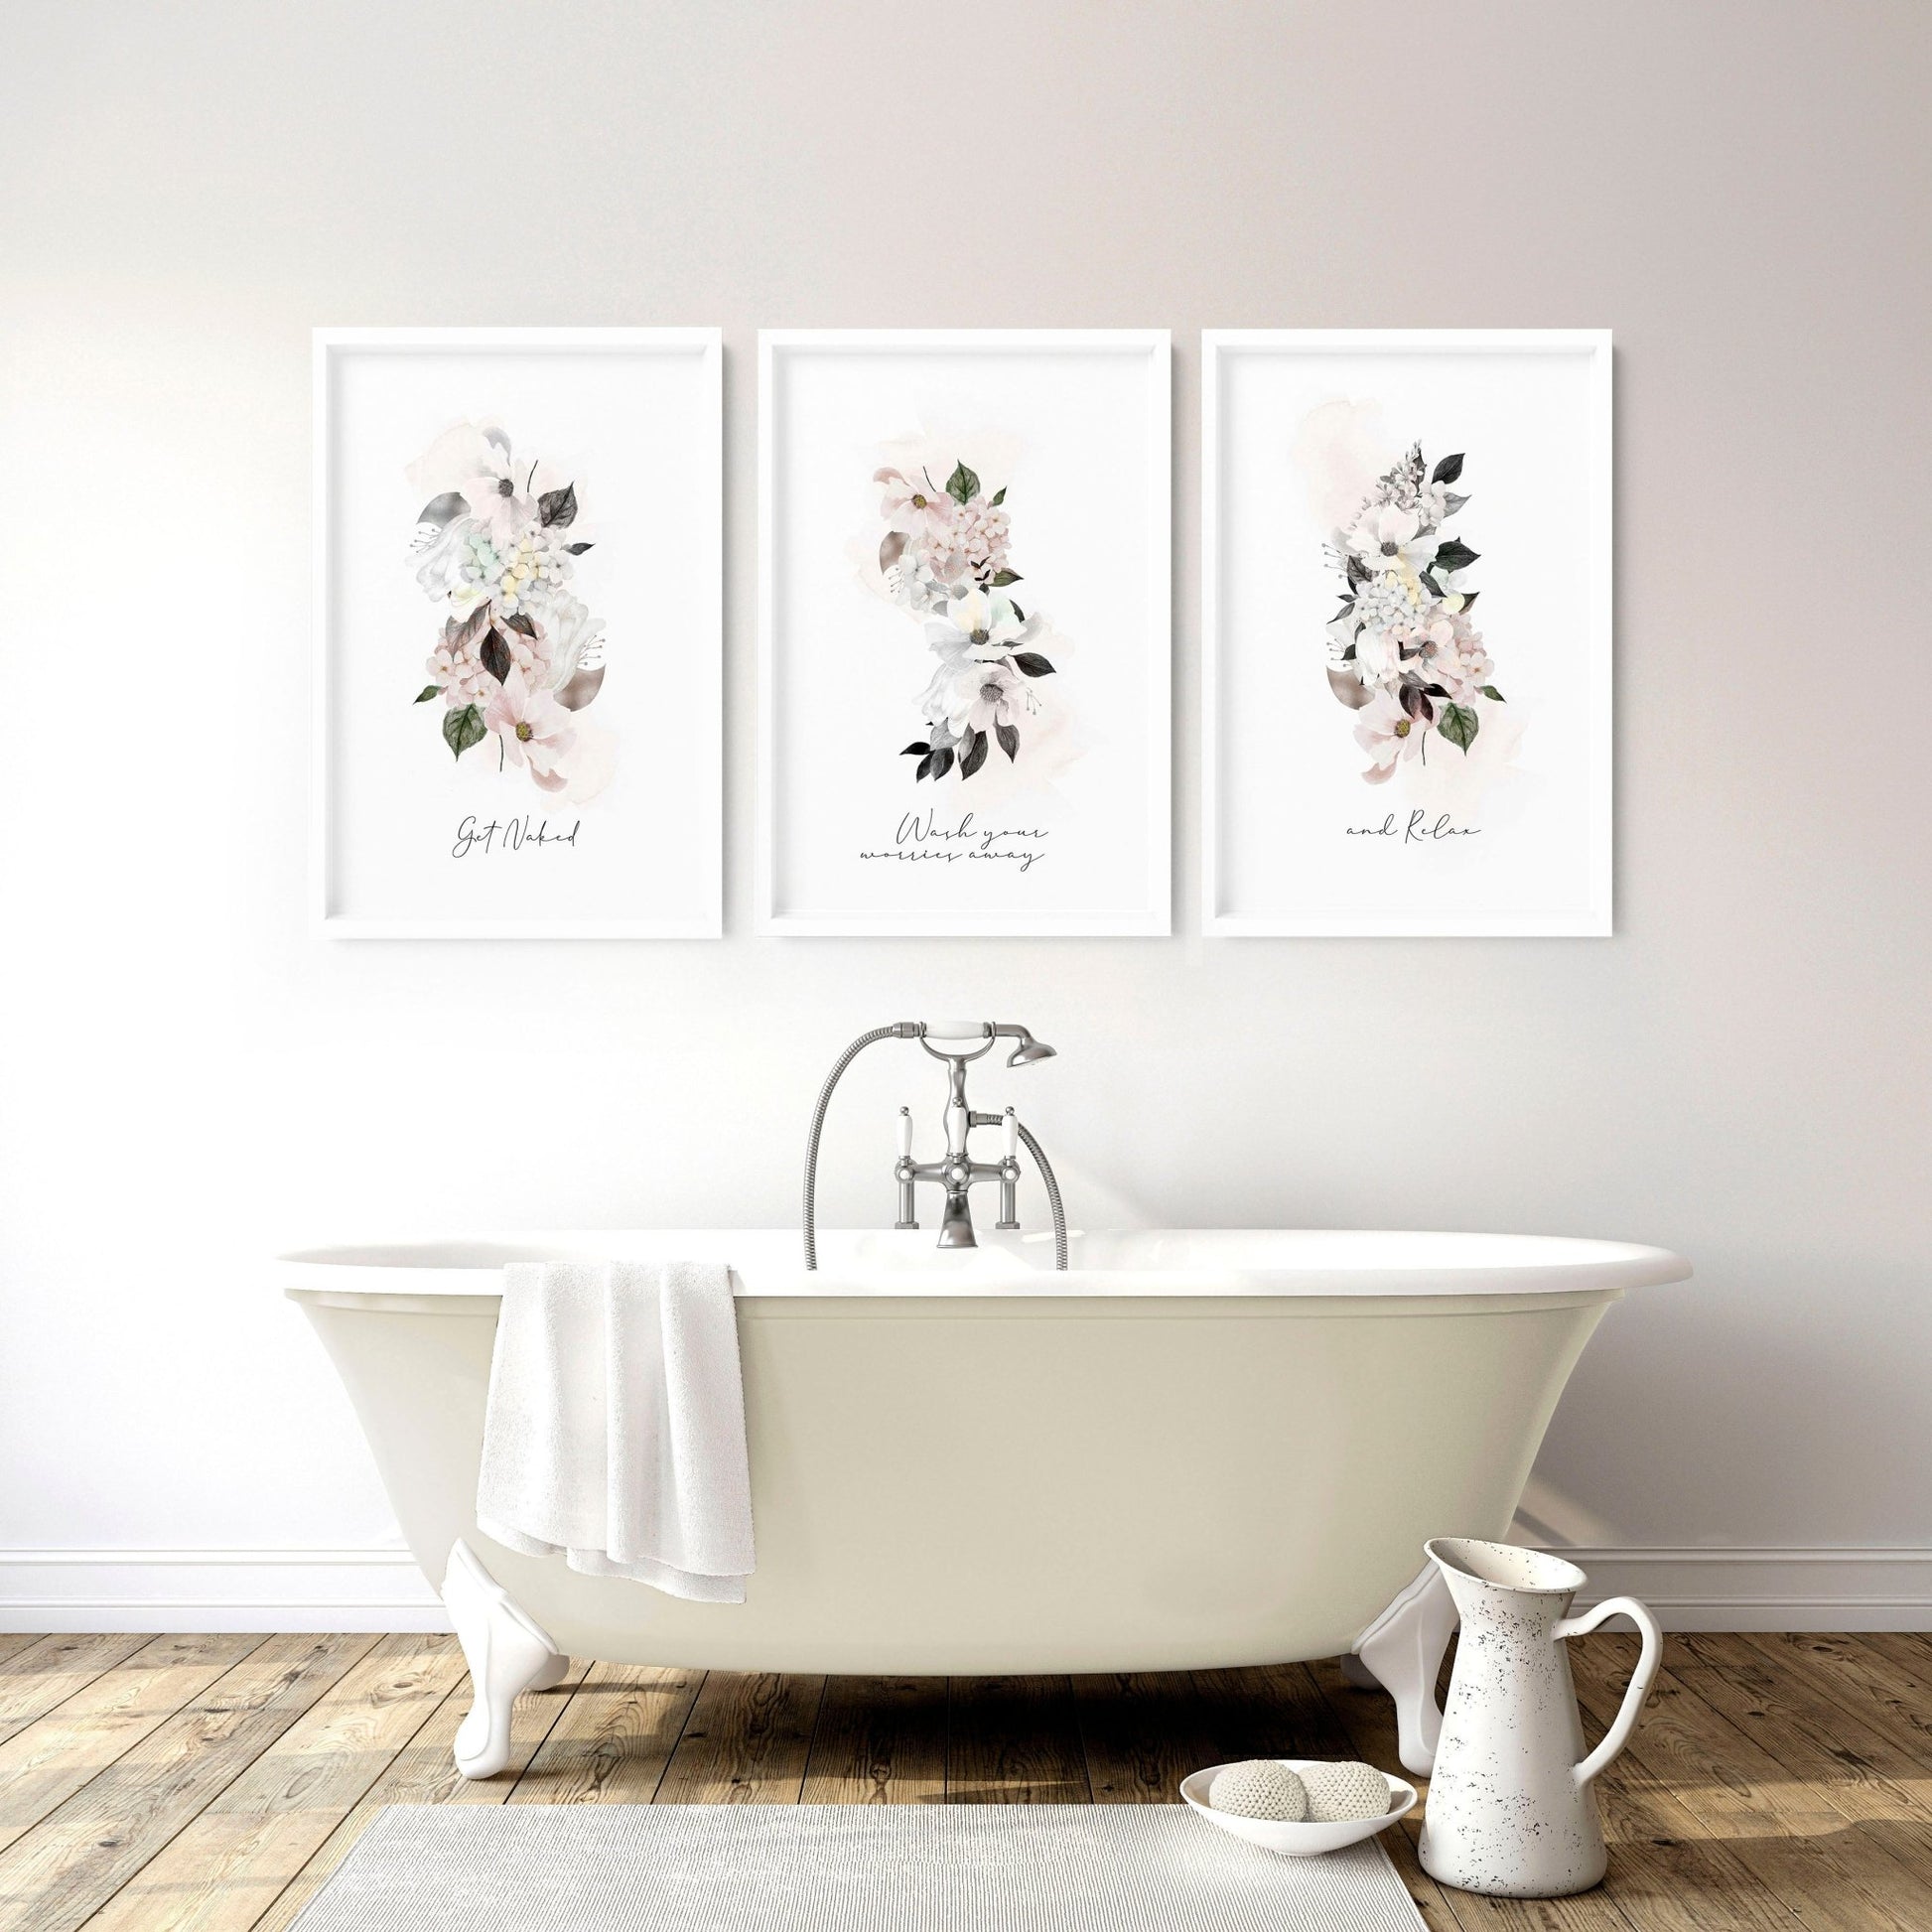 Shabby Chic framed bathroom art | set of 3 wall art - About Wall Art